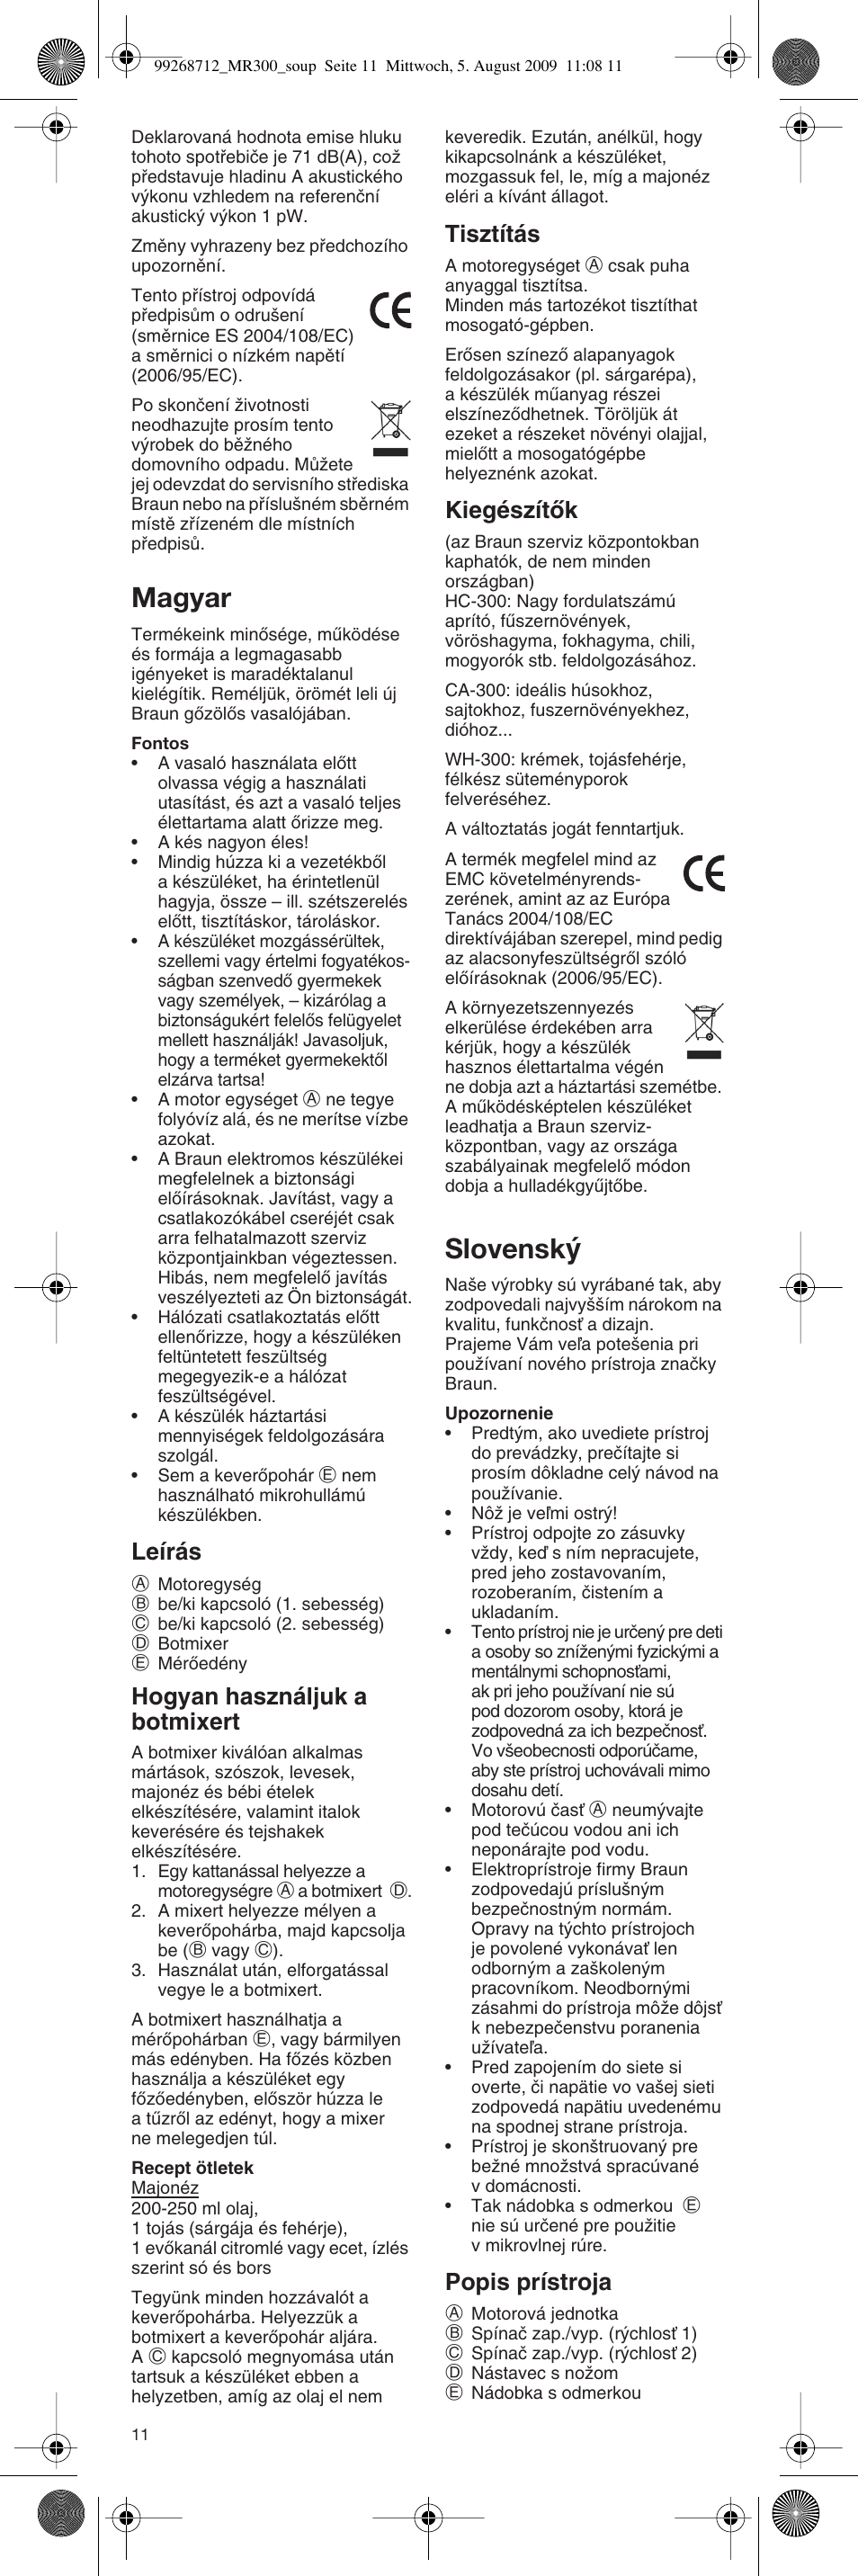 Magyar, Slovensk, Leírás | Braun Multiquick 3 4162 User Manual | Page 11 /  21